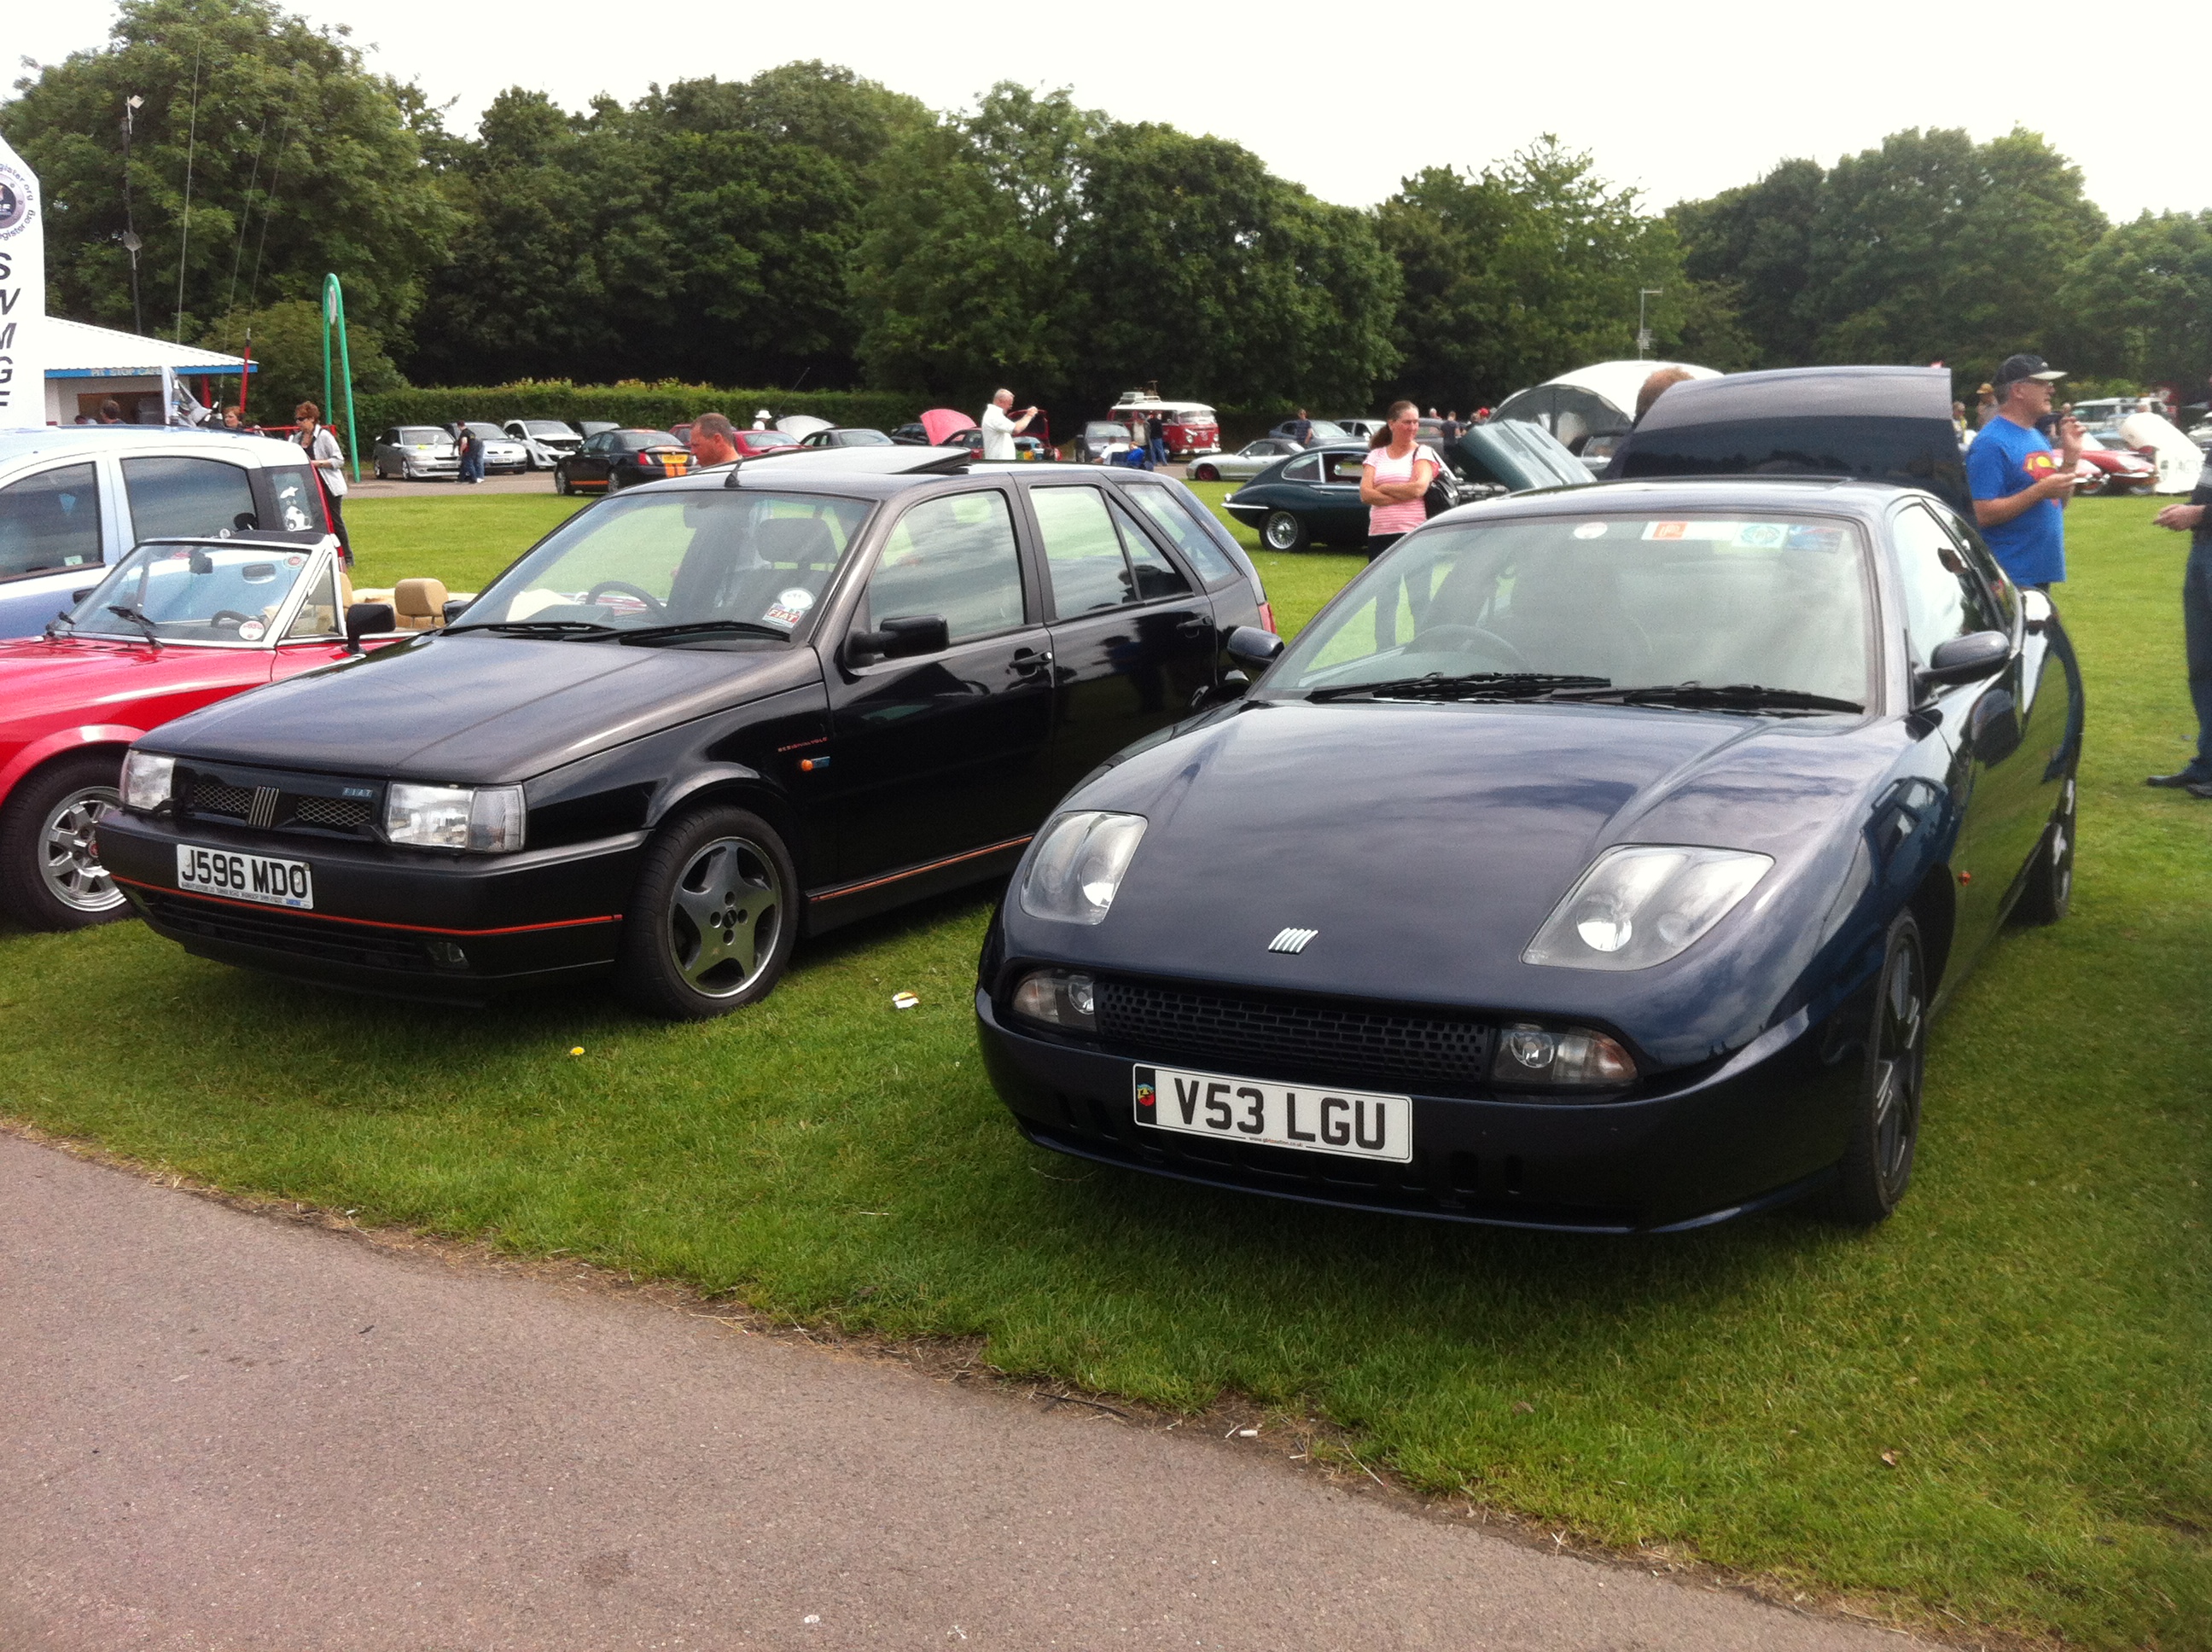 Fiat Motor club attended.